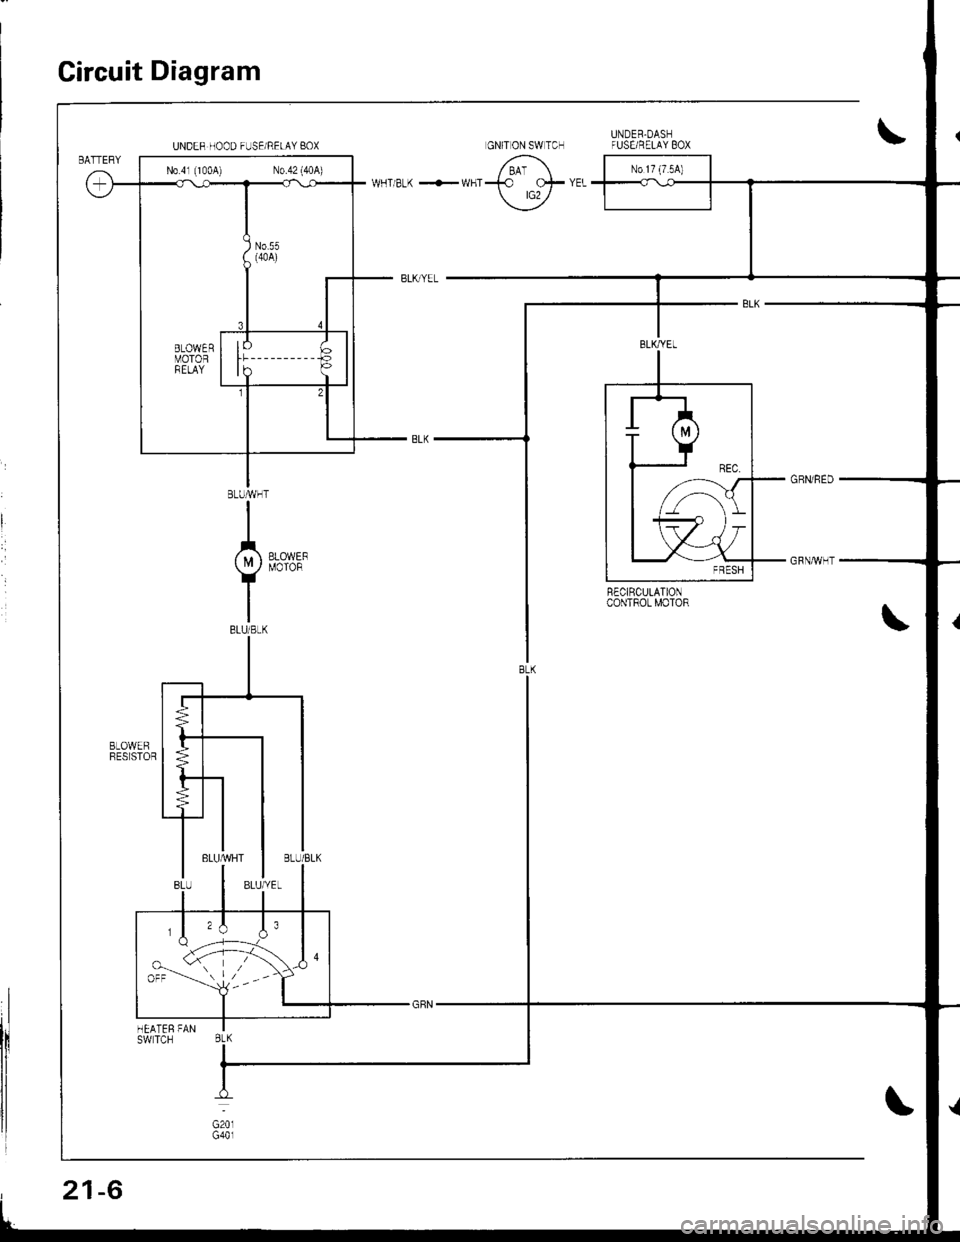 HONDA INTEGRA 1998 4.G Owners Guide Circuit Diagram
R€CIRCULATIONcoNTROt MOTOR
UNDER HOOD FUSE/RELAY BOX
N0.41 (1004) N0.42 (40A)
,,\J.orr ---- l,--
BtK
21-6 